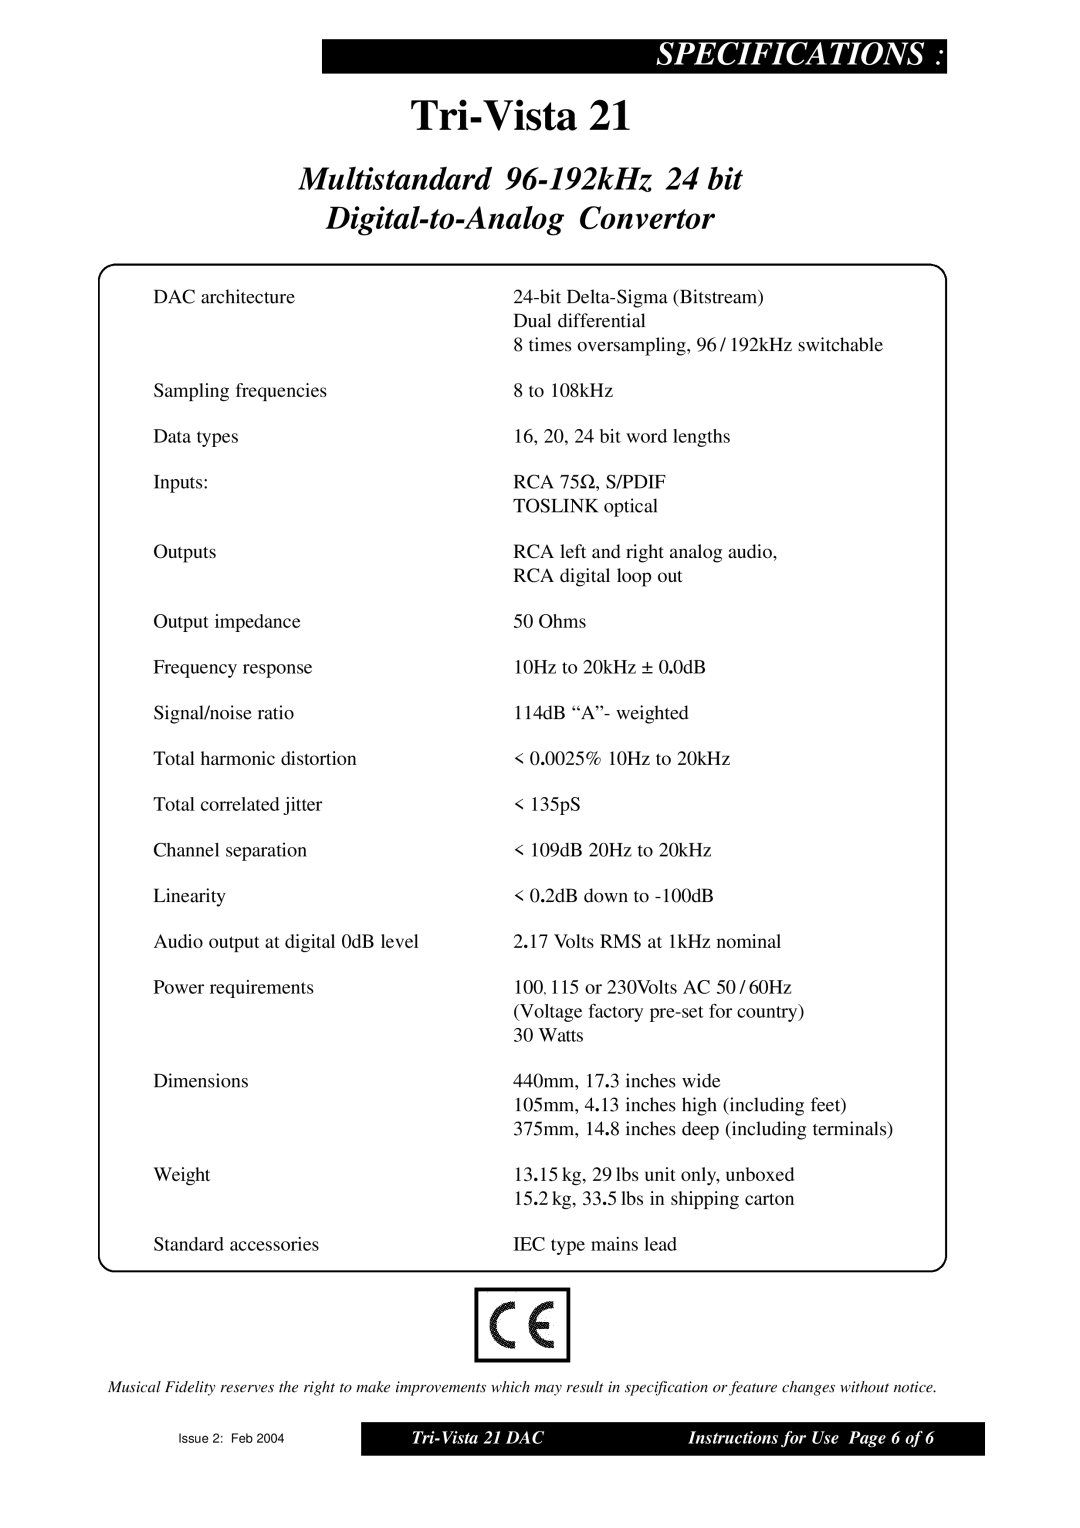 Musical Fidelity 21 manual Multistandard 96-192kHz 24 bit Digital-to-Analog Convertor, Tri-Vista, Specifications 